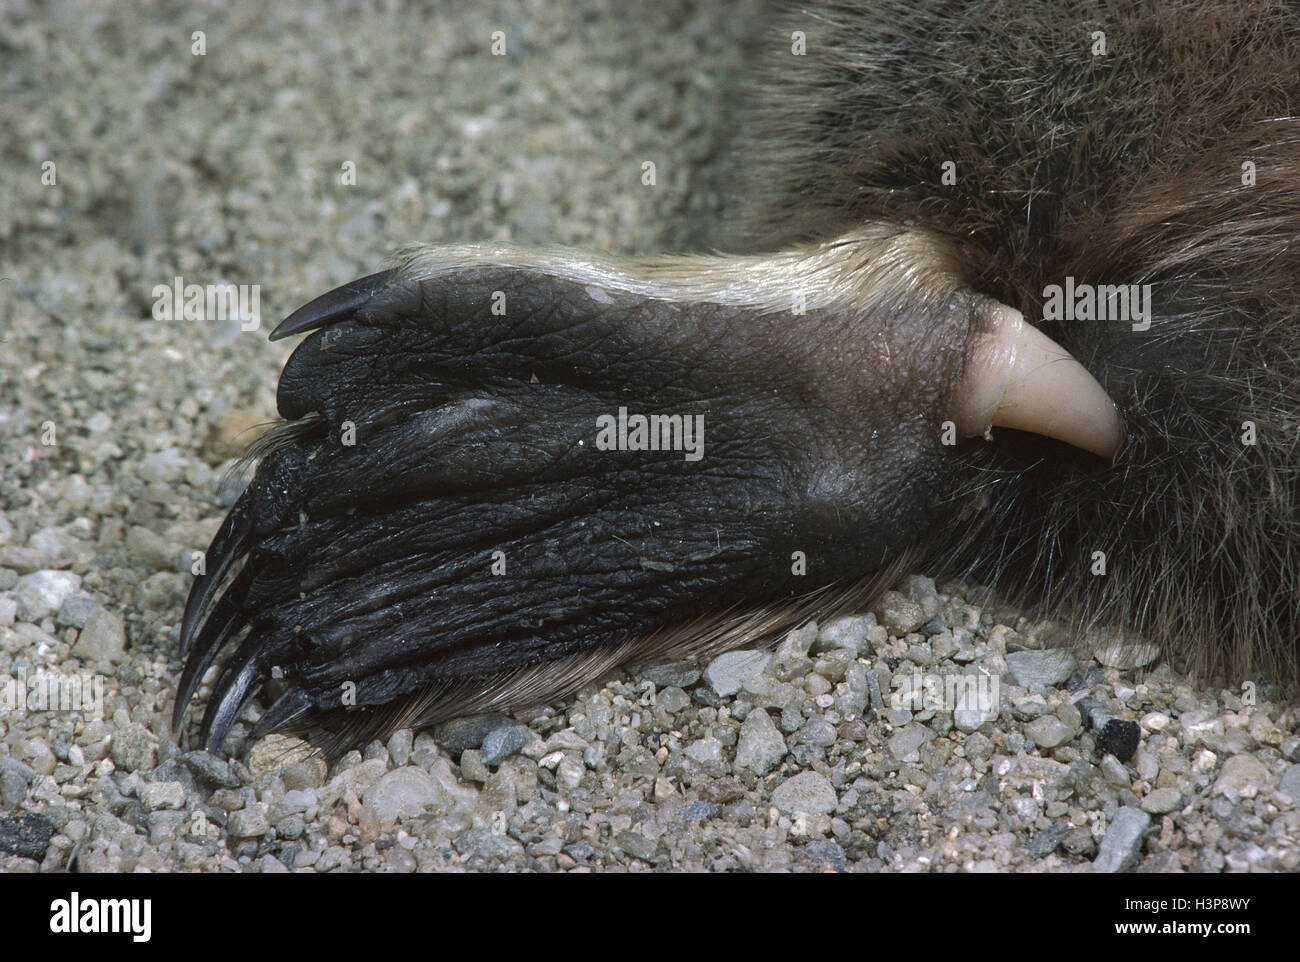 Platypus (Ornithorhynchus anatinus) Stock Photo